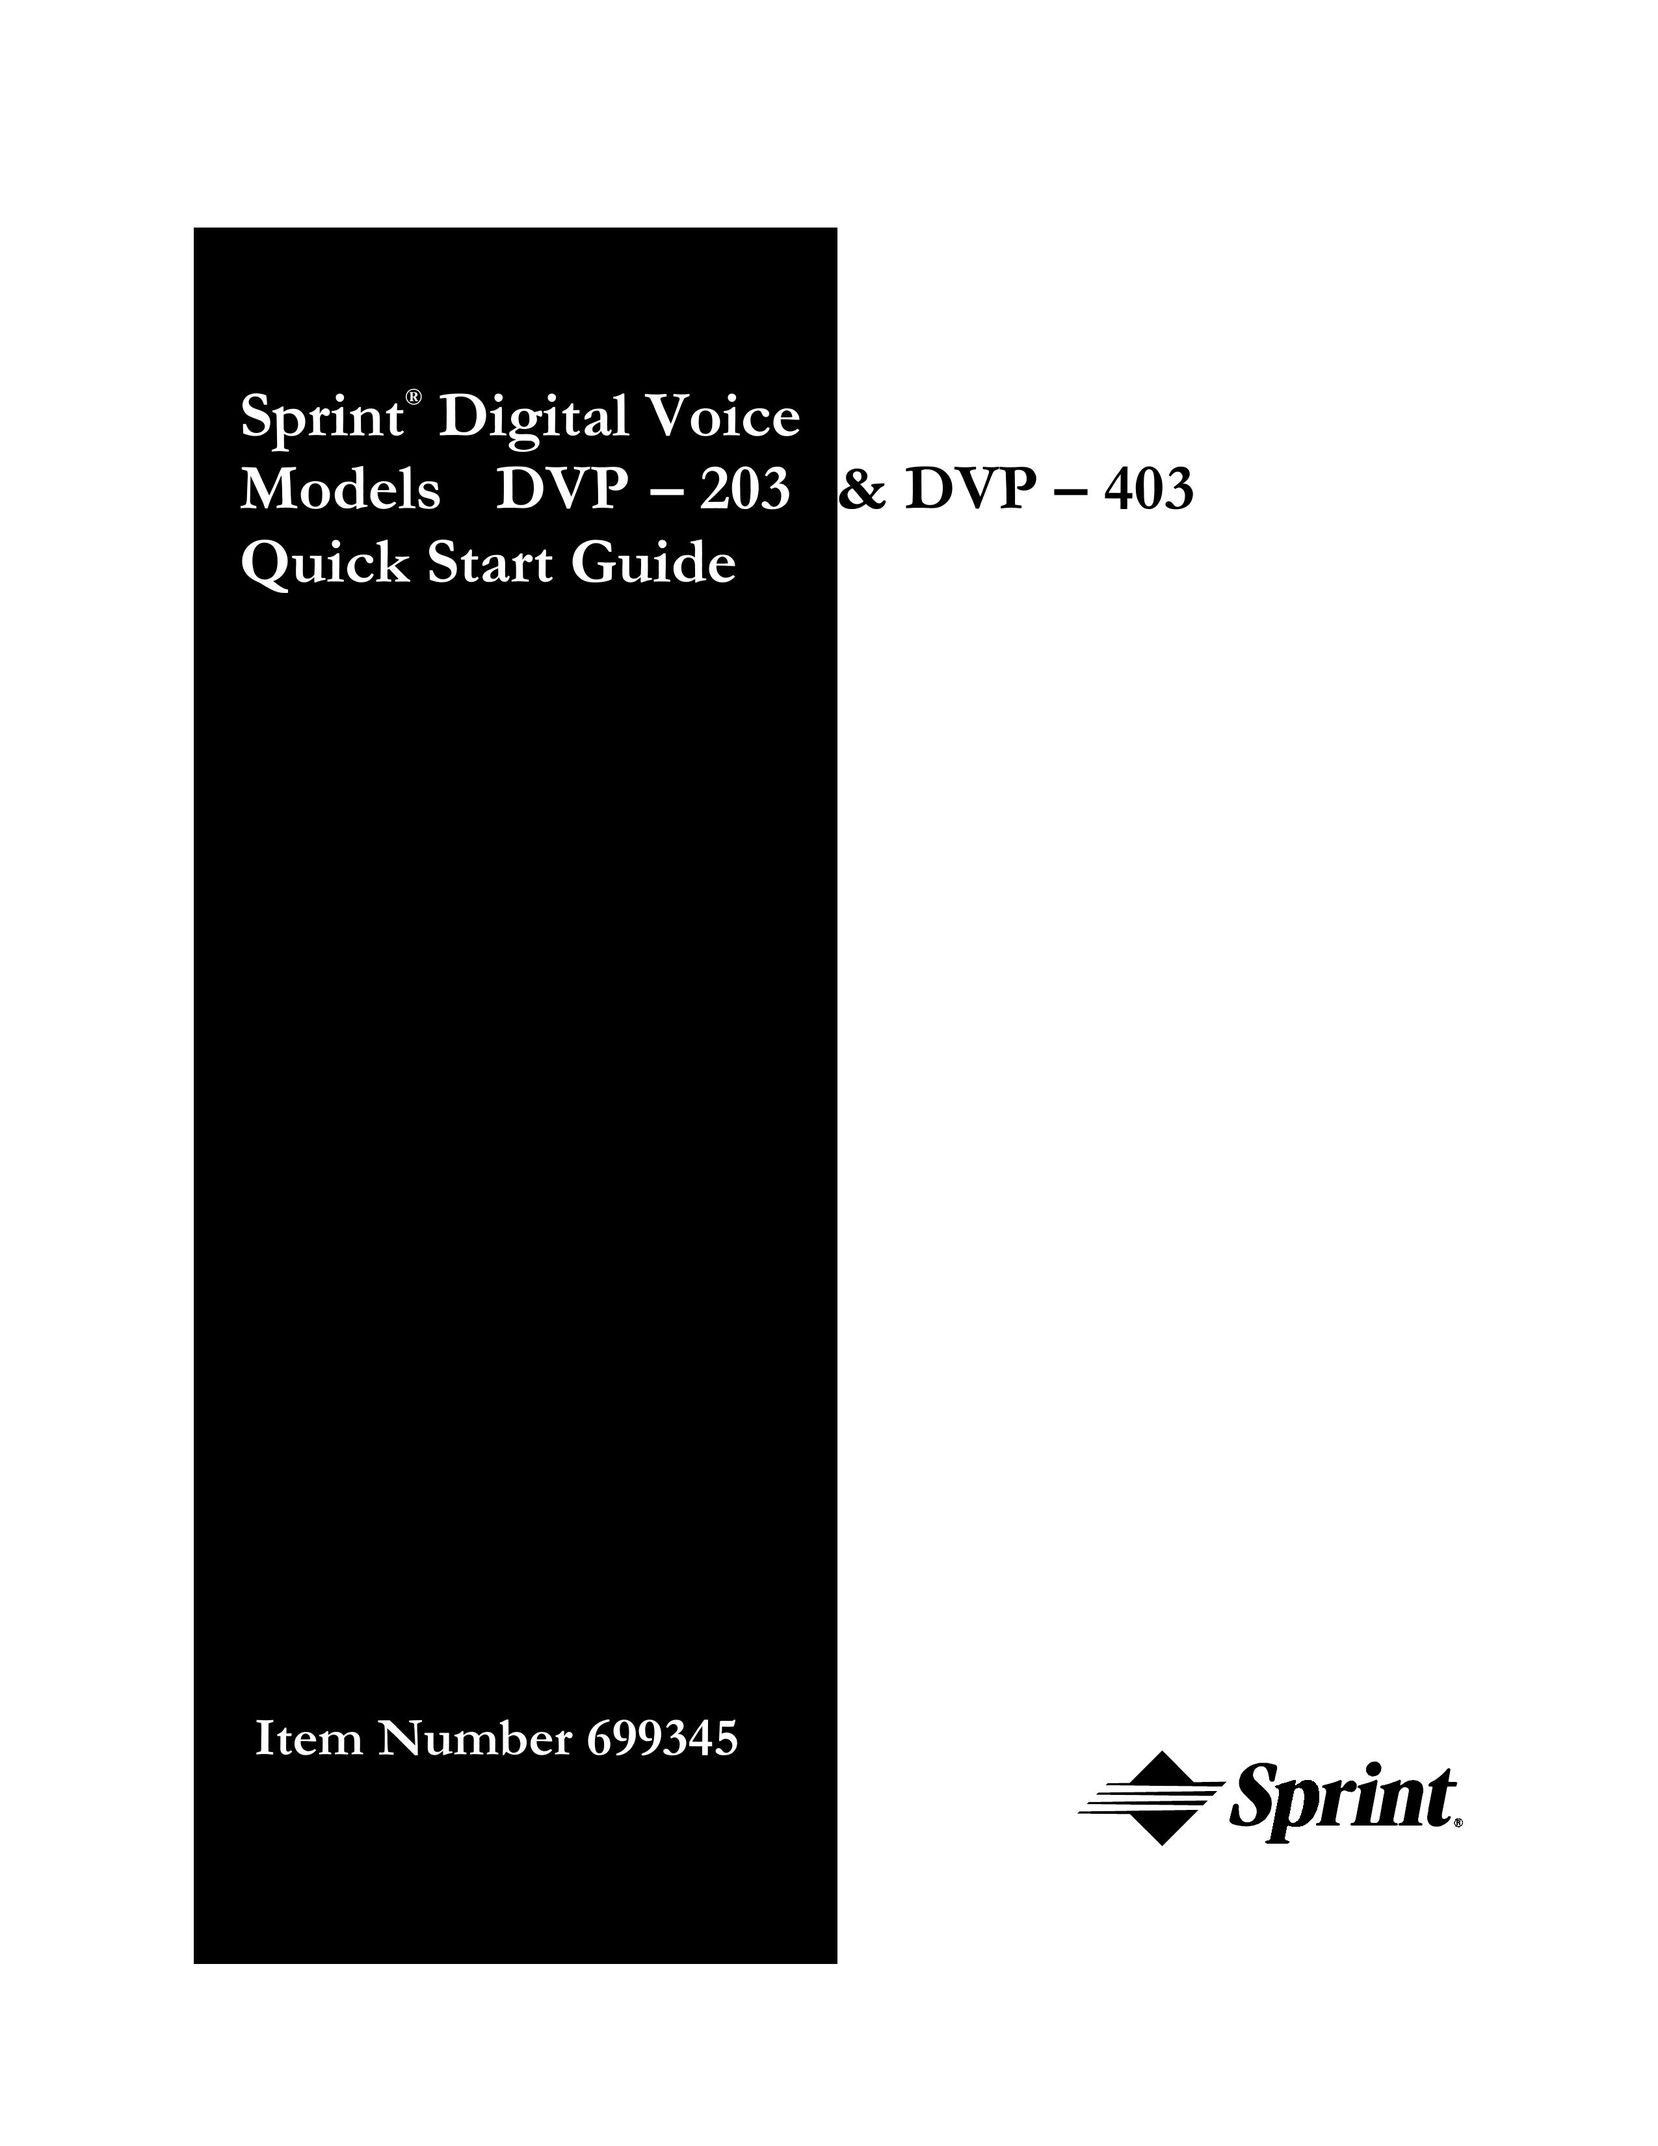 Sprint Nextel DVP 403 Answering Machine User Manual